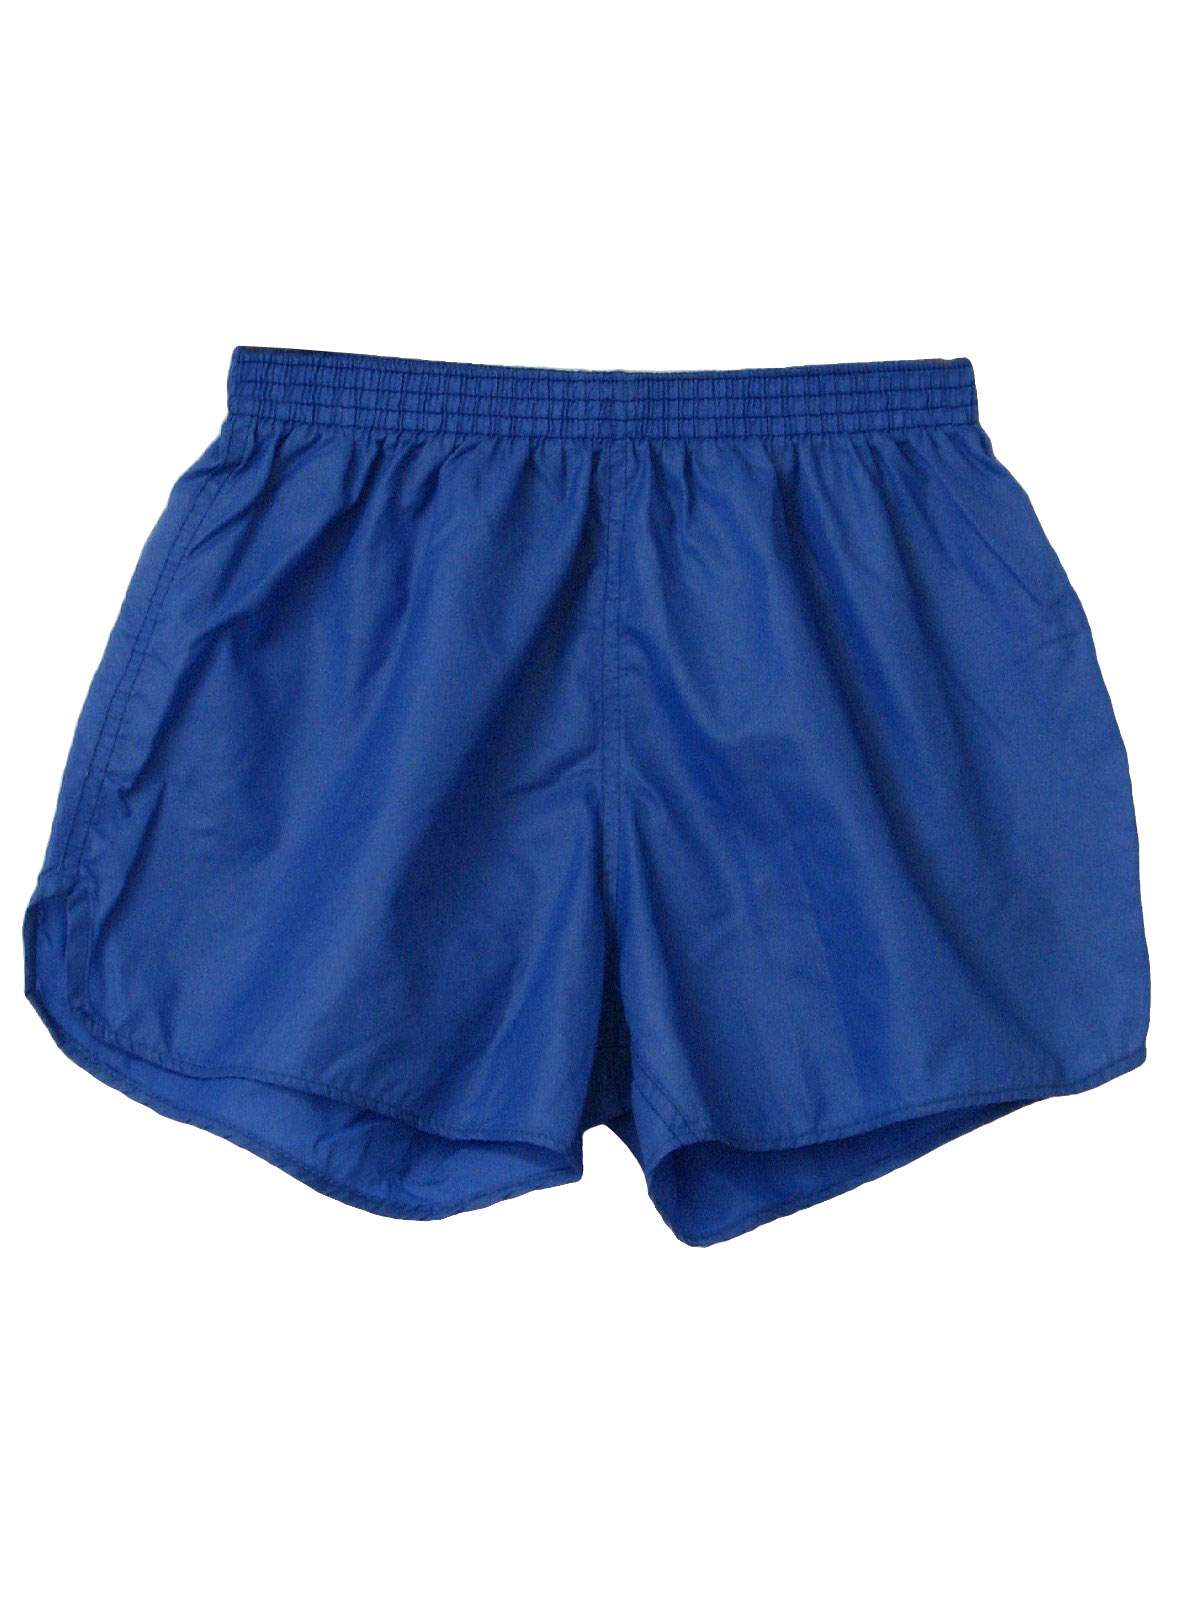 Soffe Eighties Vintage Shorts: 80s -Soffe- Mens blue nylon elastic ...